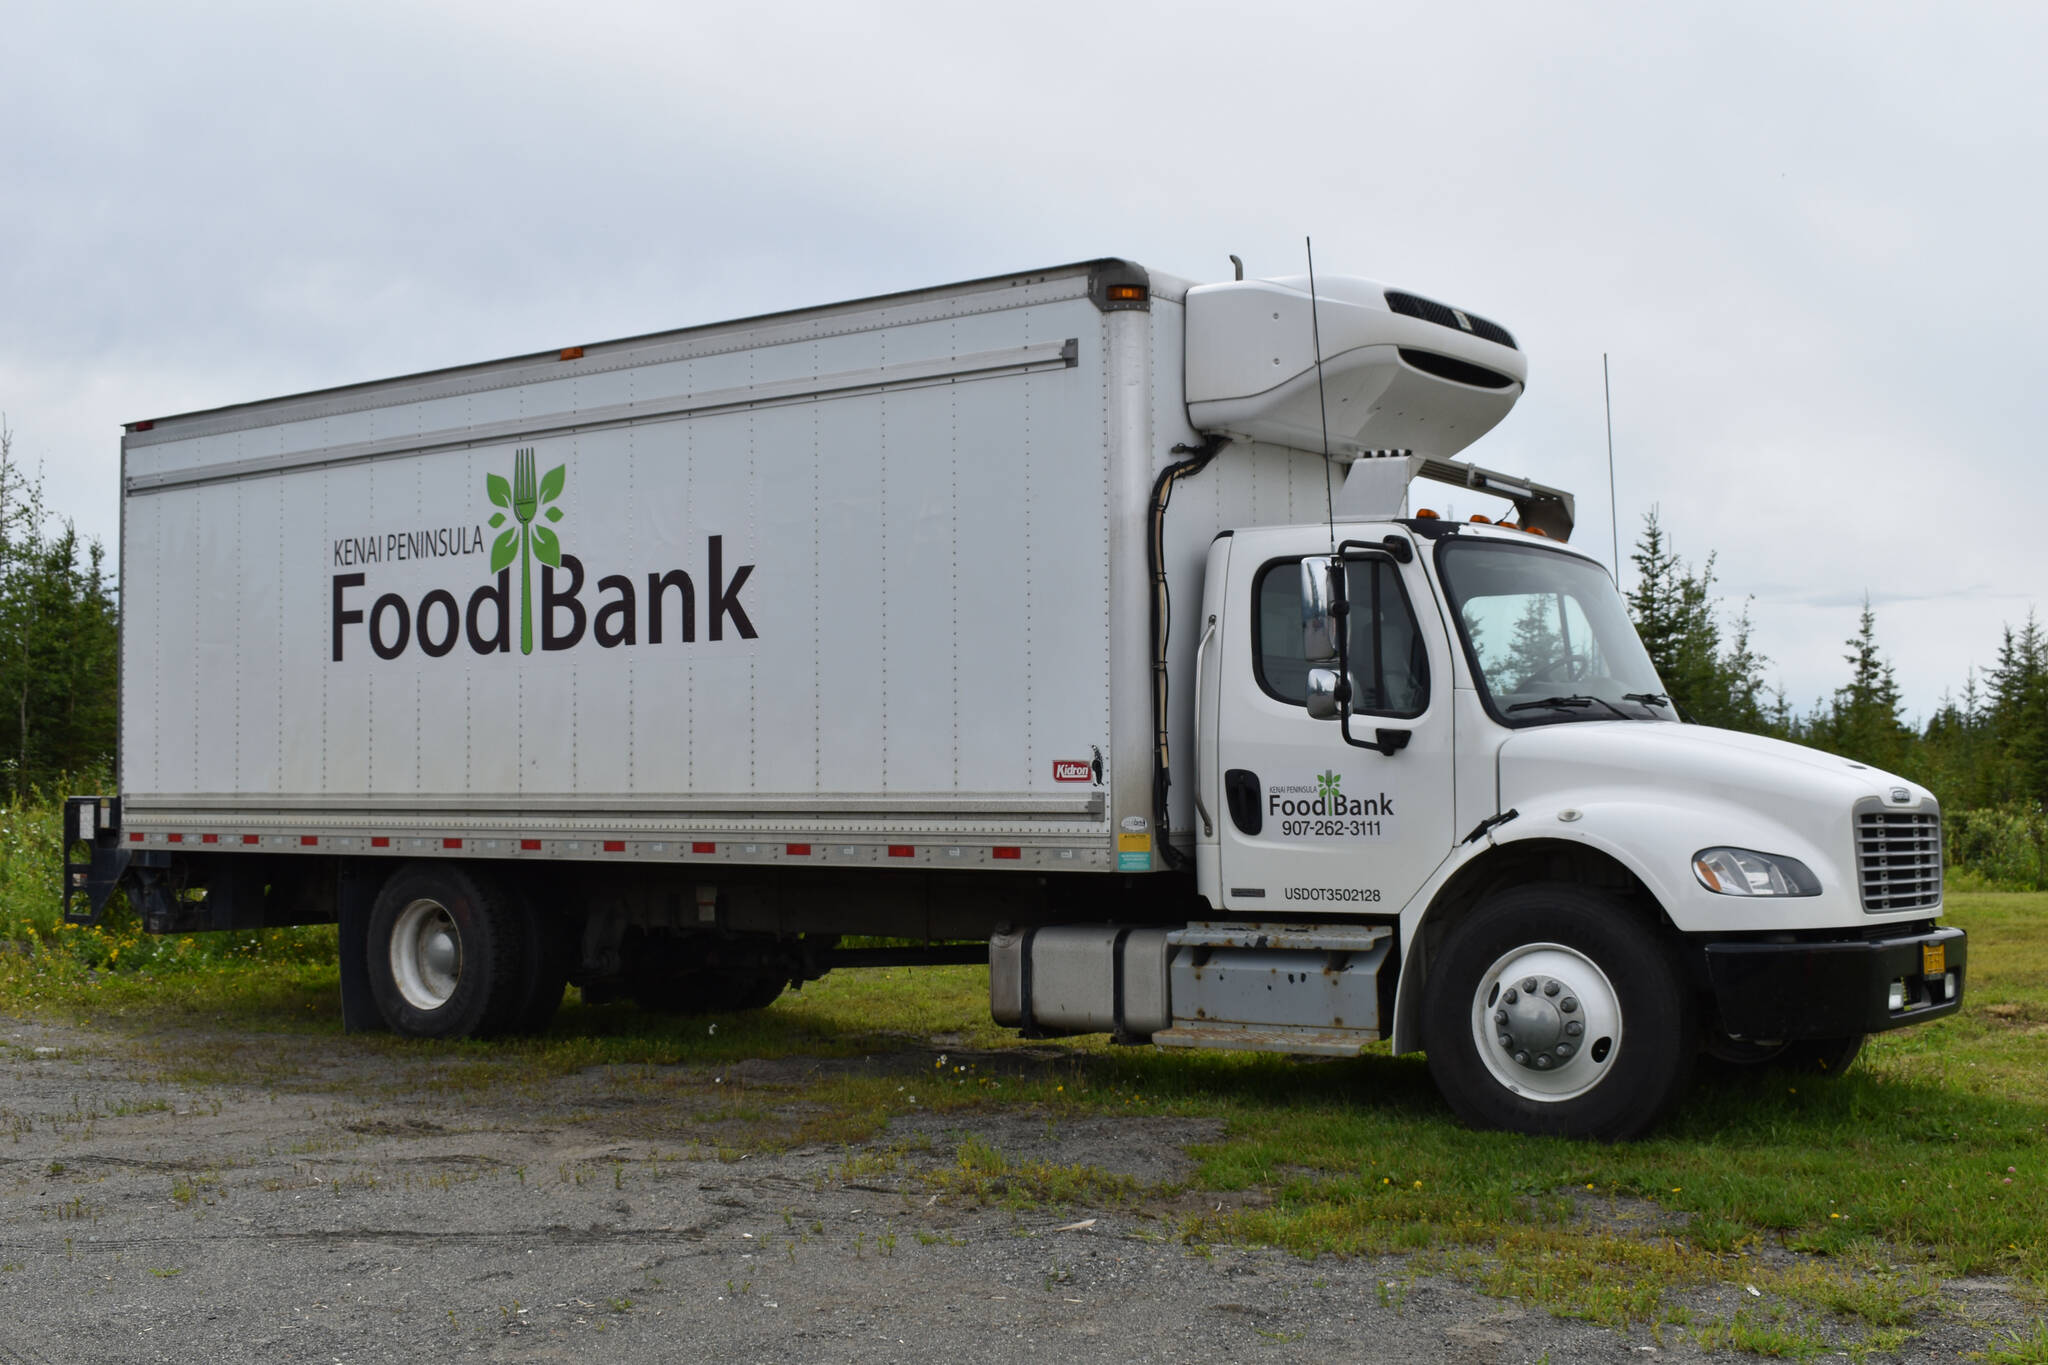 A Kenai Peninsula Food Bank truck in the Food Bank parking lot on Aug. 4, 2022 in Soldotna, Alaska (Jake Dye/Peninsula Clarion)